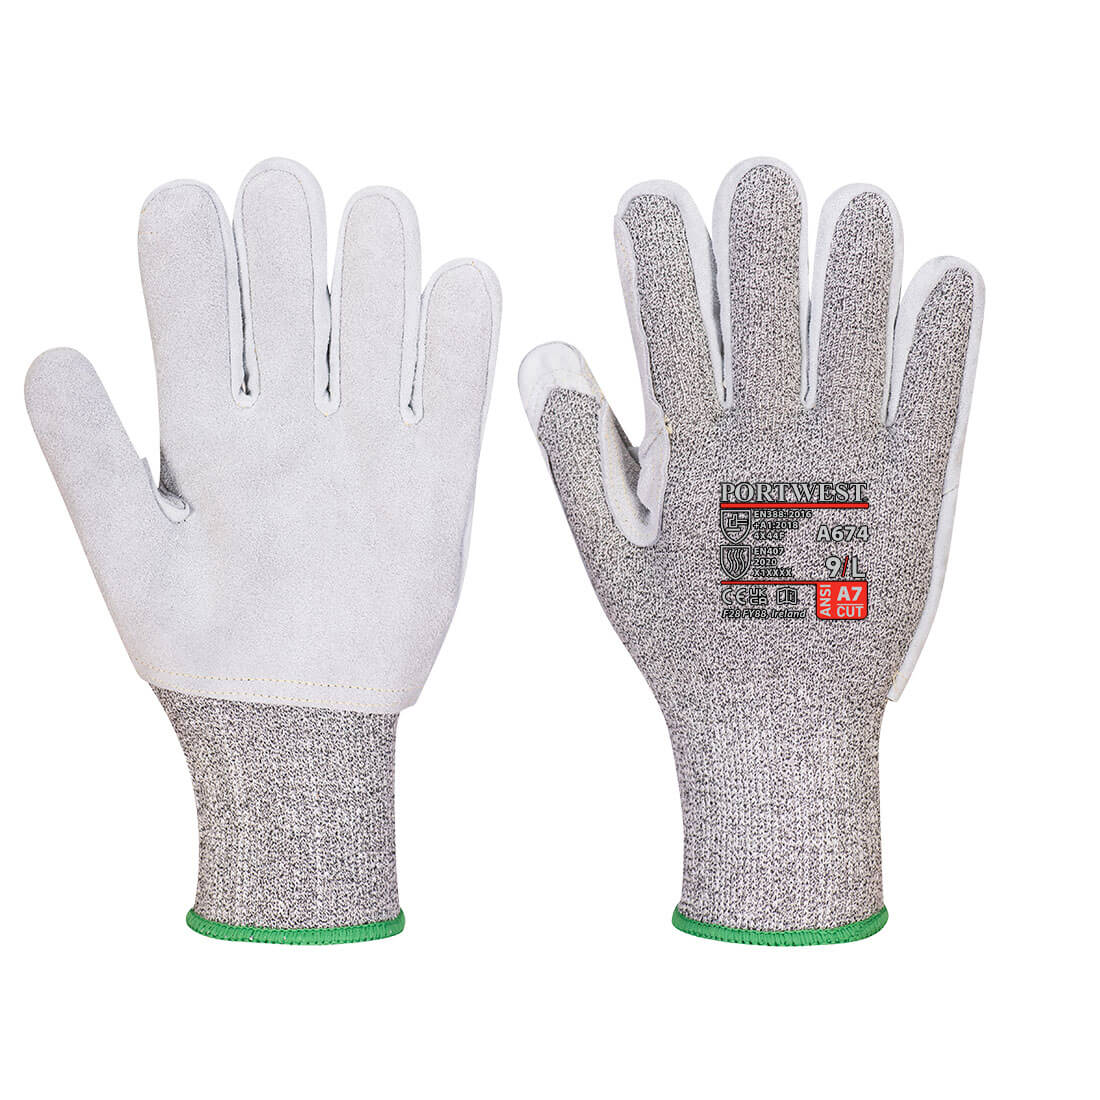 A674 Portwest® CS AHR13 Leather Palm String Knit A7 Cut Gloves -